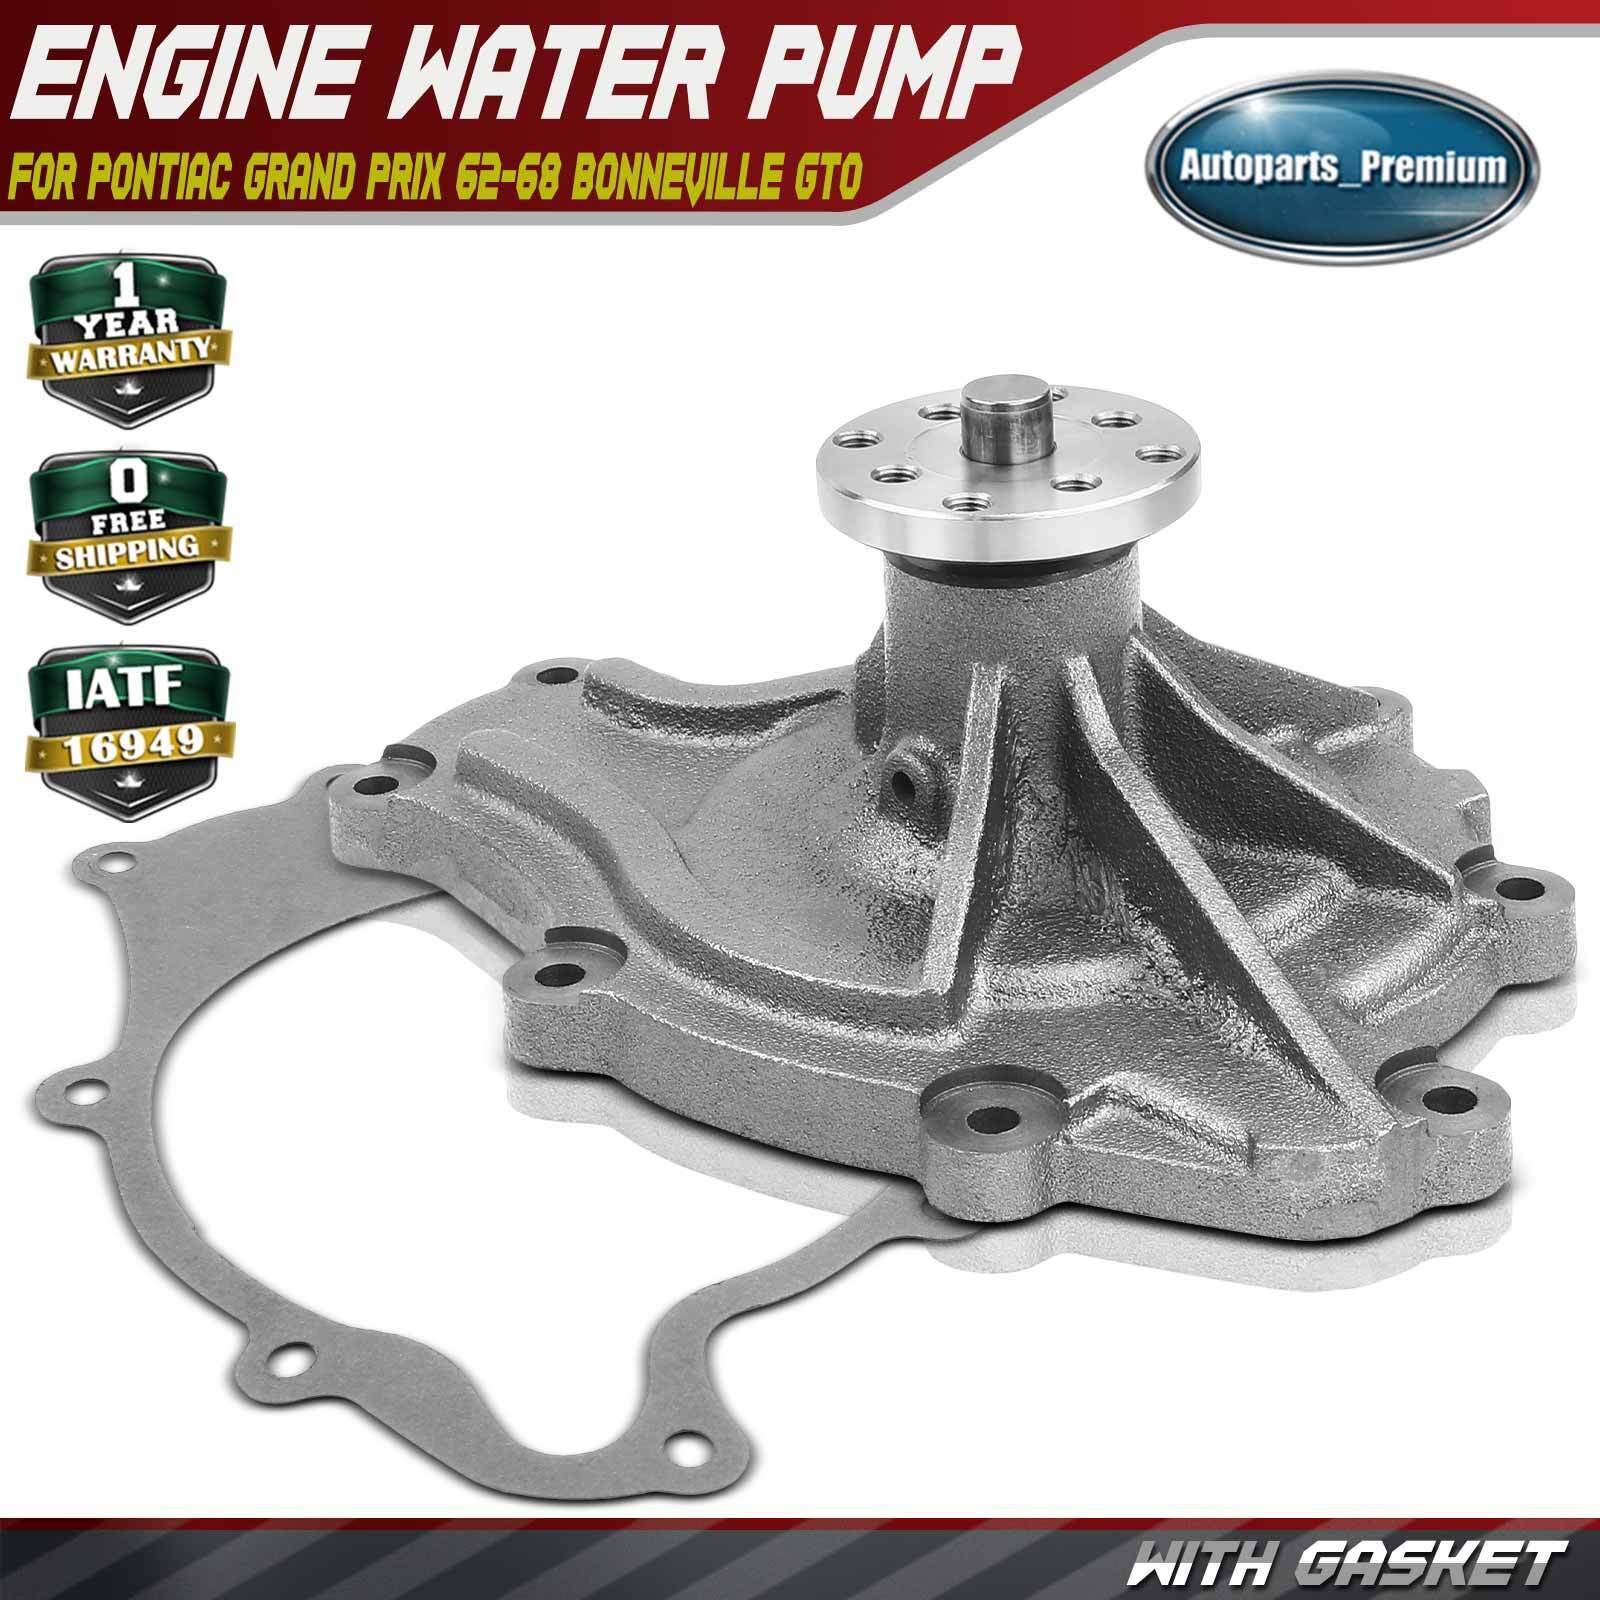 Engine Water Pump w/ Gasket for Pontiac Grand Prix 62-68 Bonneville Firebird GTO